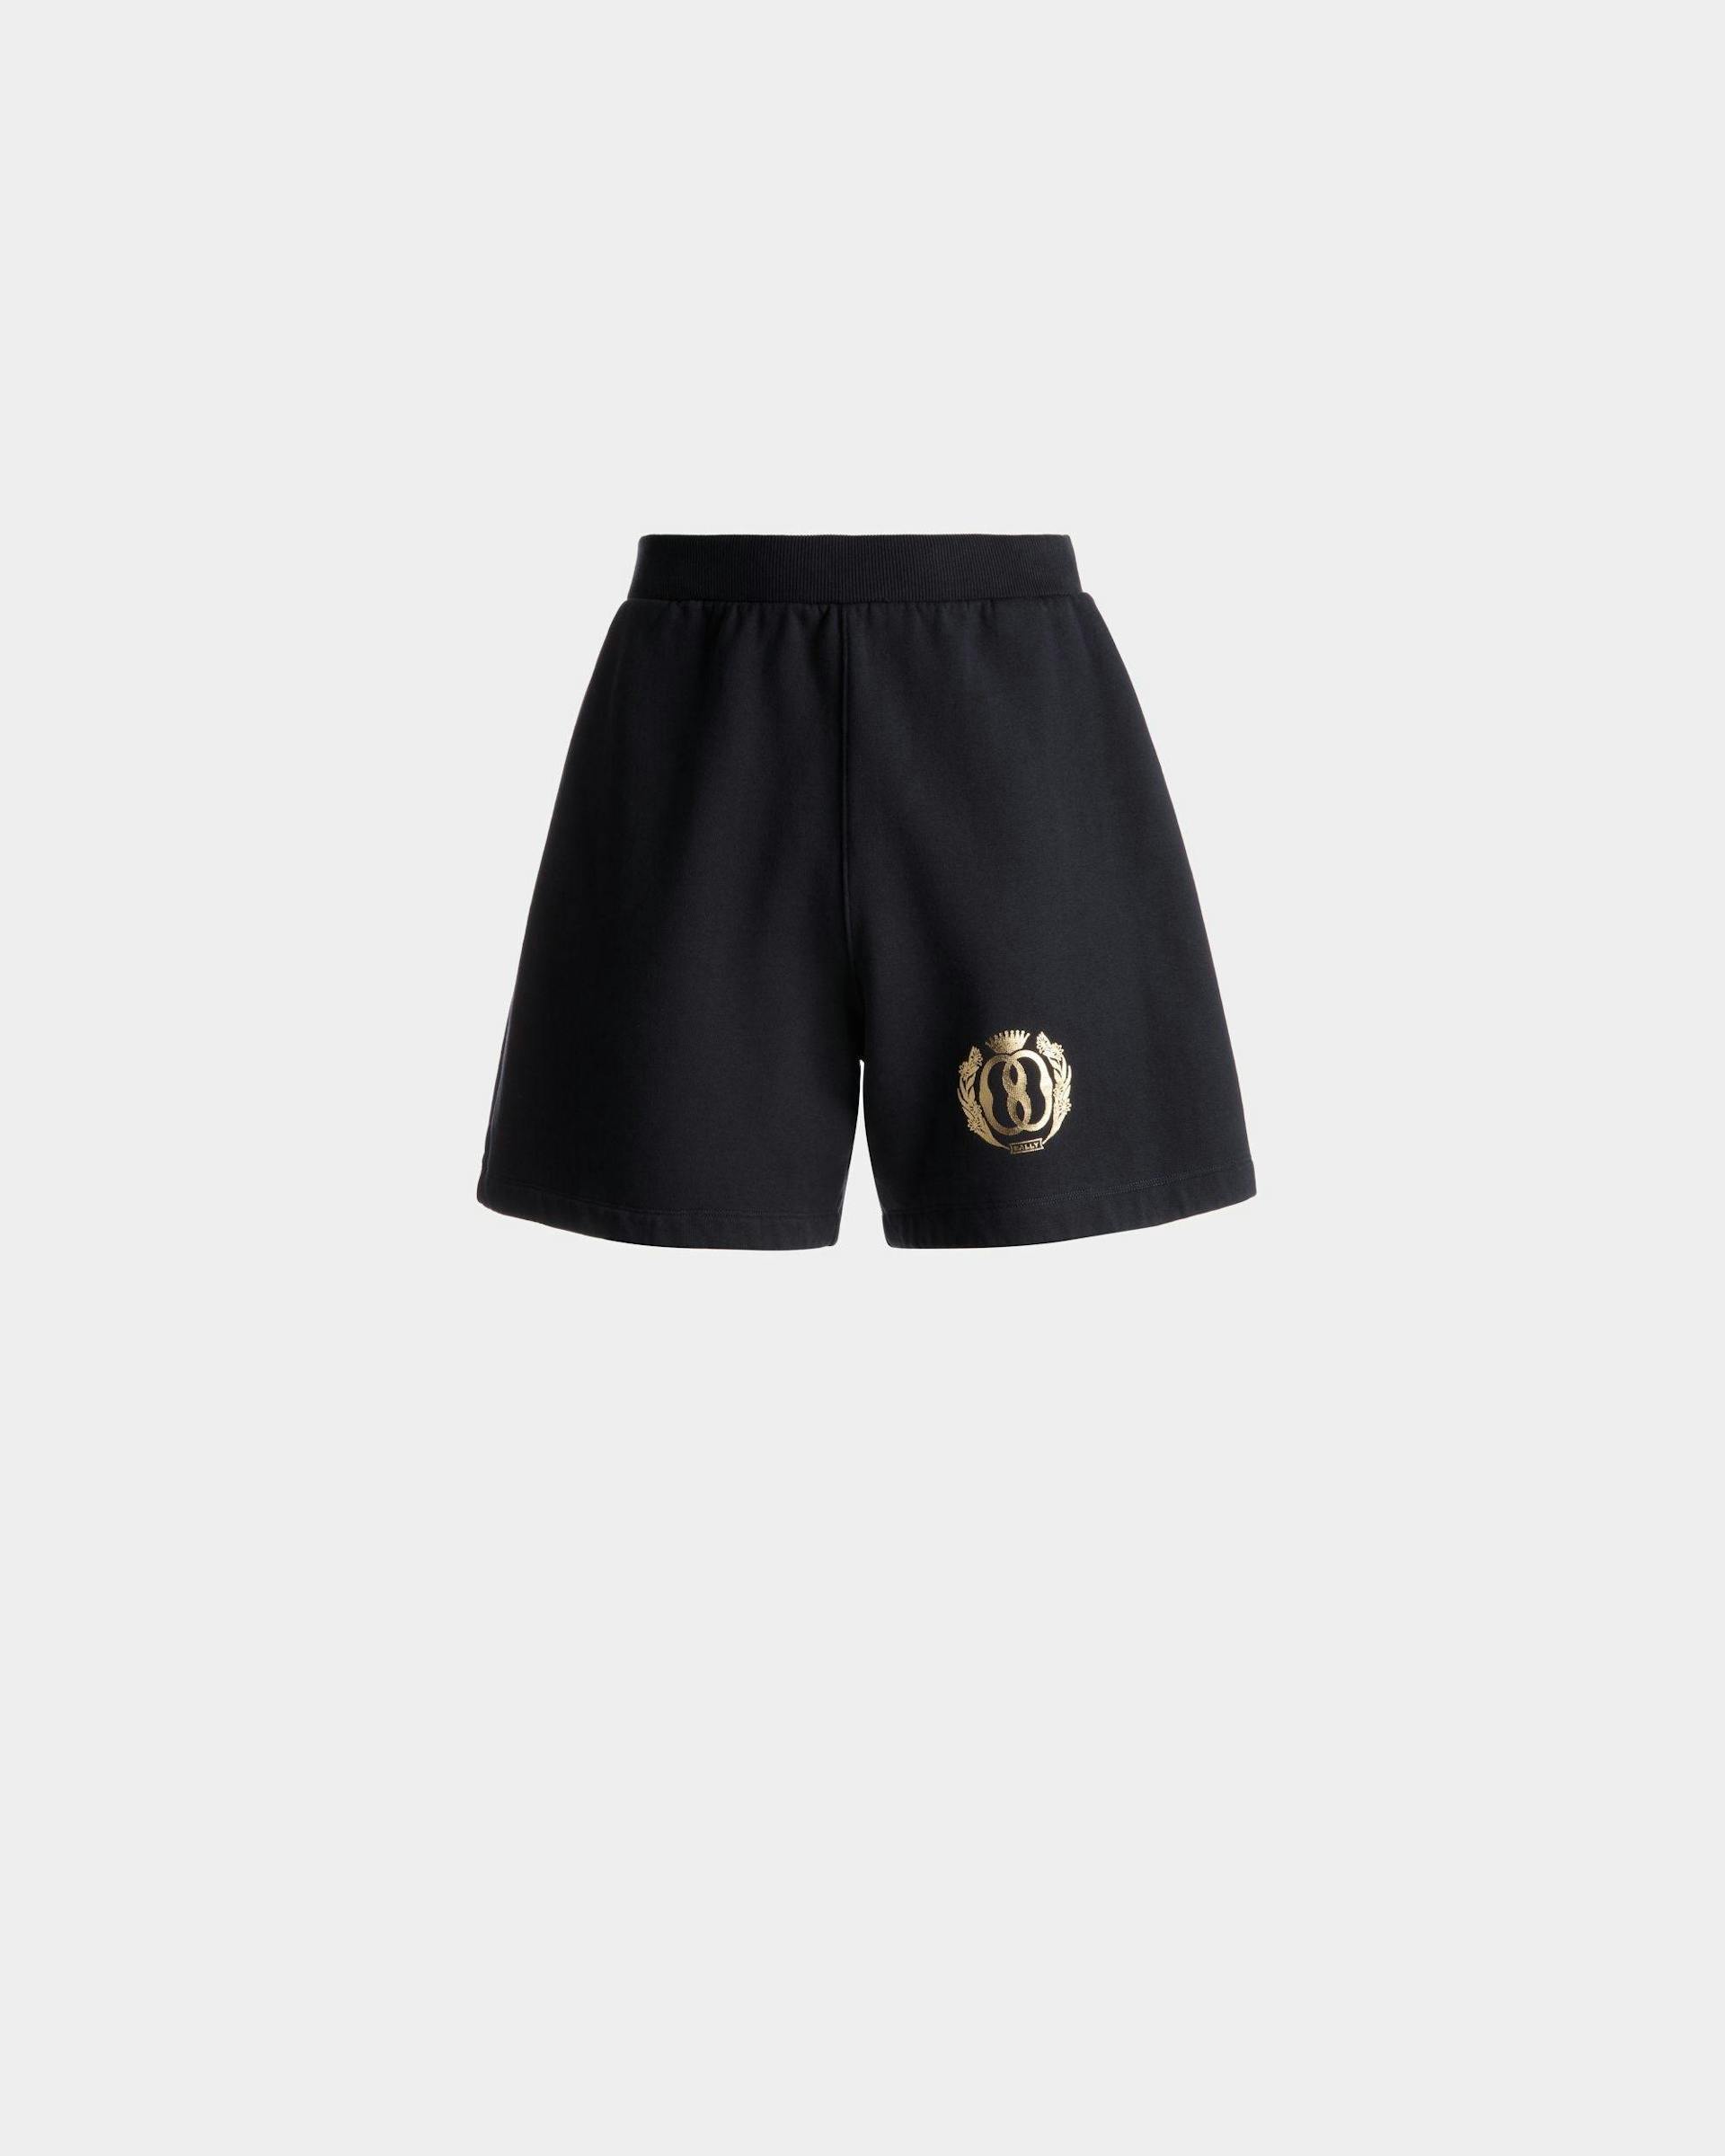 Men's Sweatpant Shorts In Midnight Cotton | Bally | Still Life Front